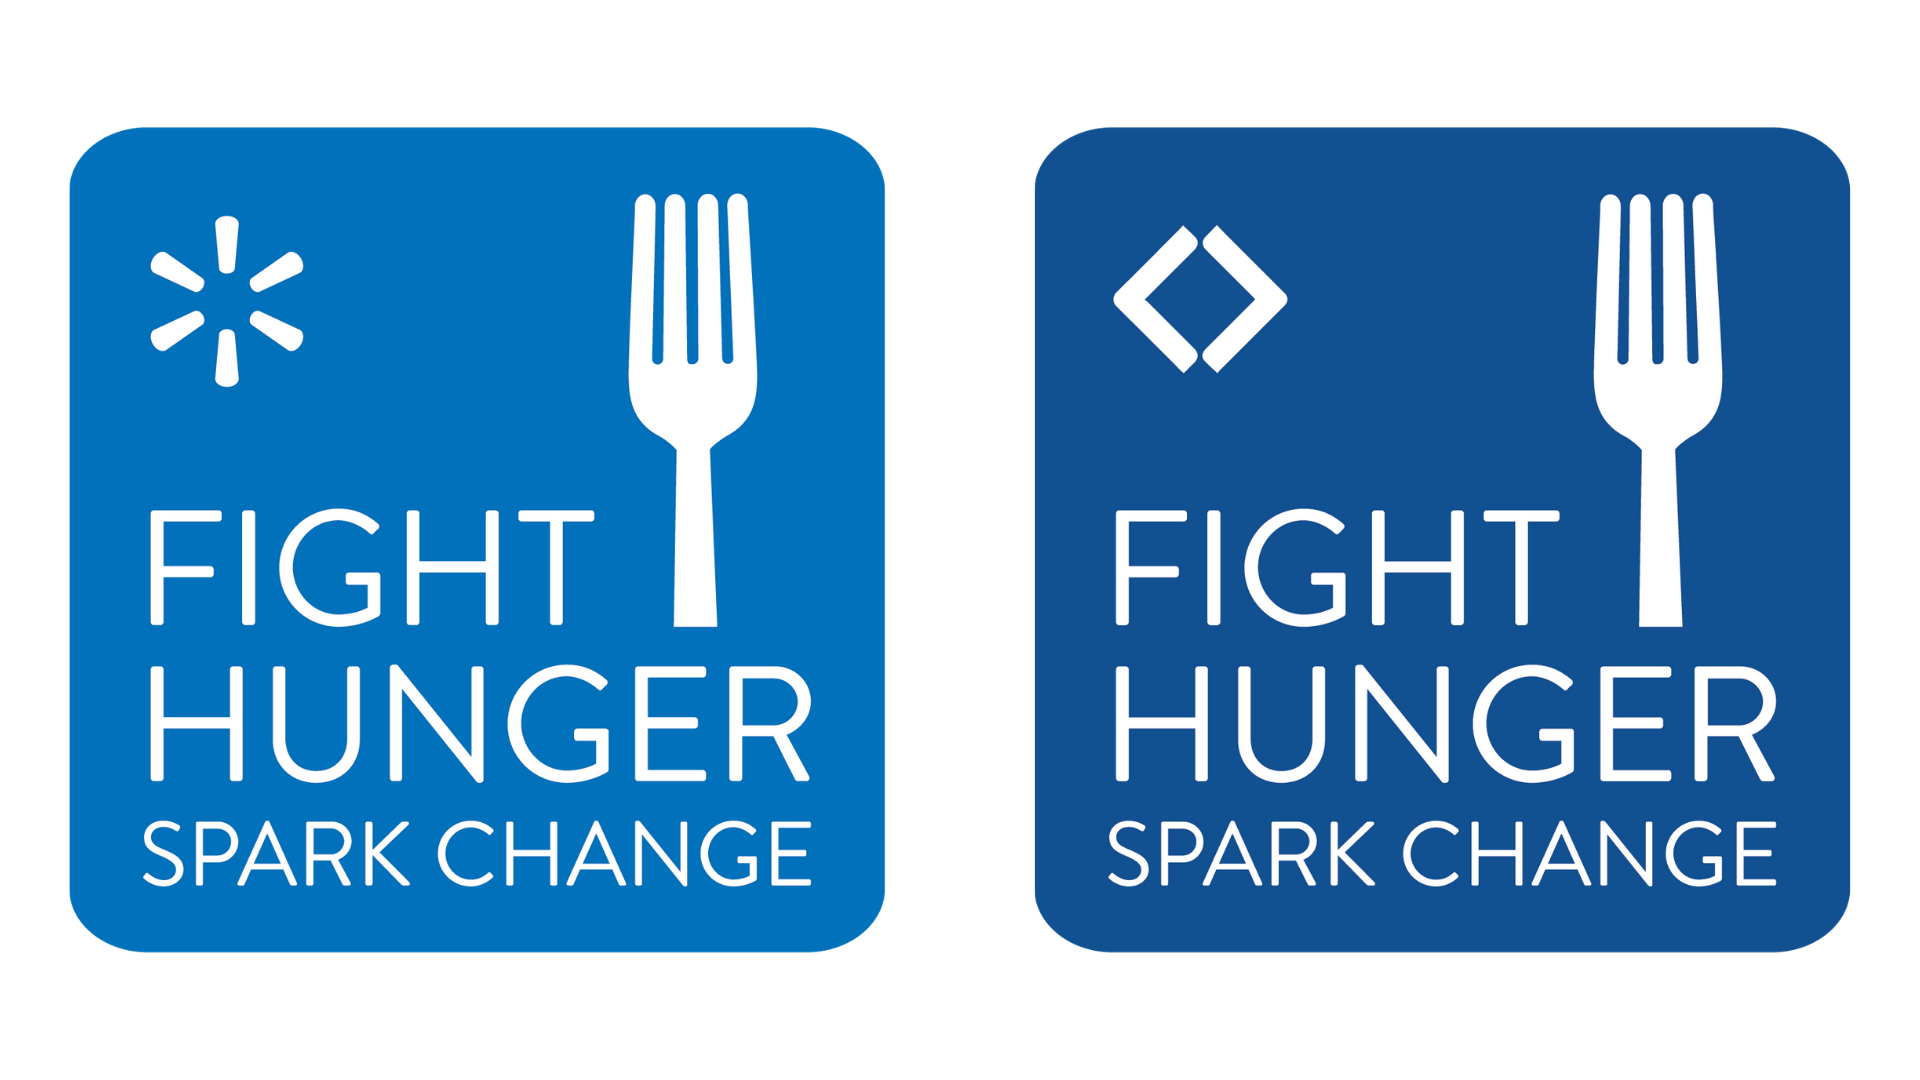 Fight Hunger. Spark Change.